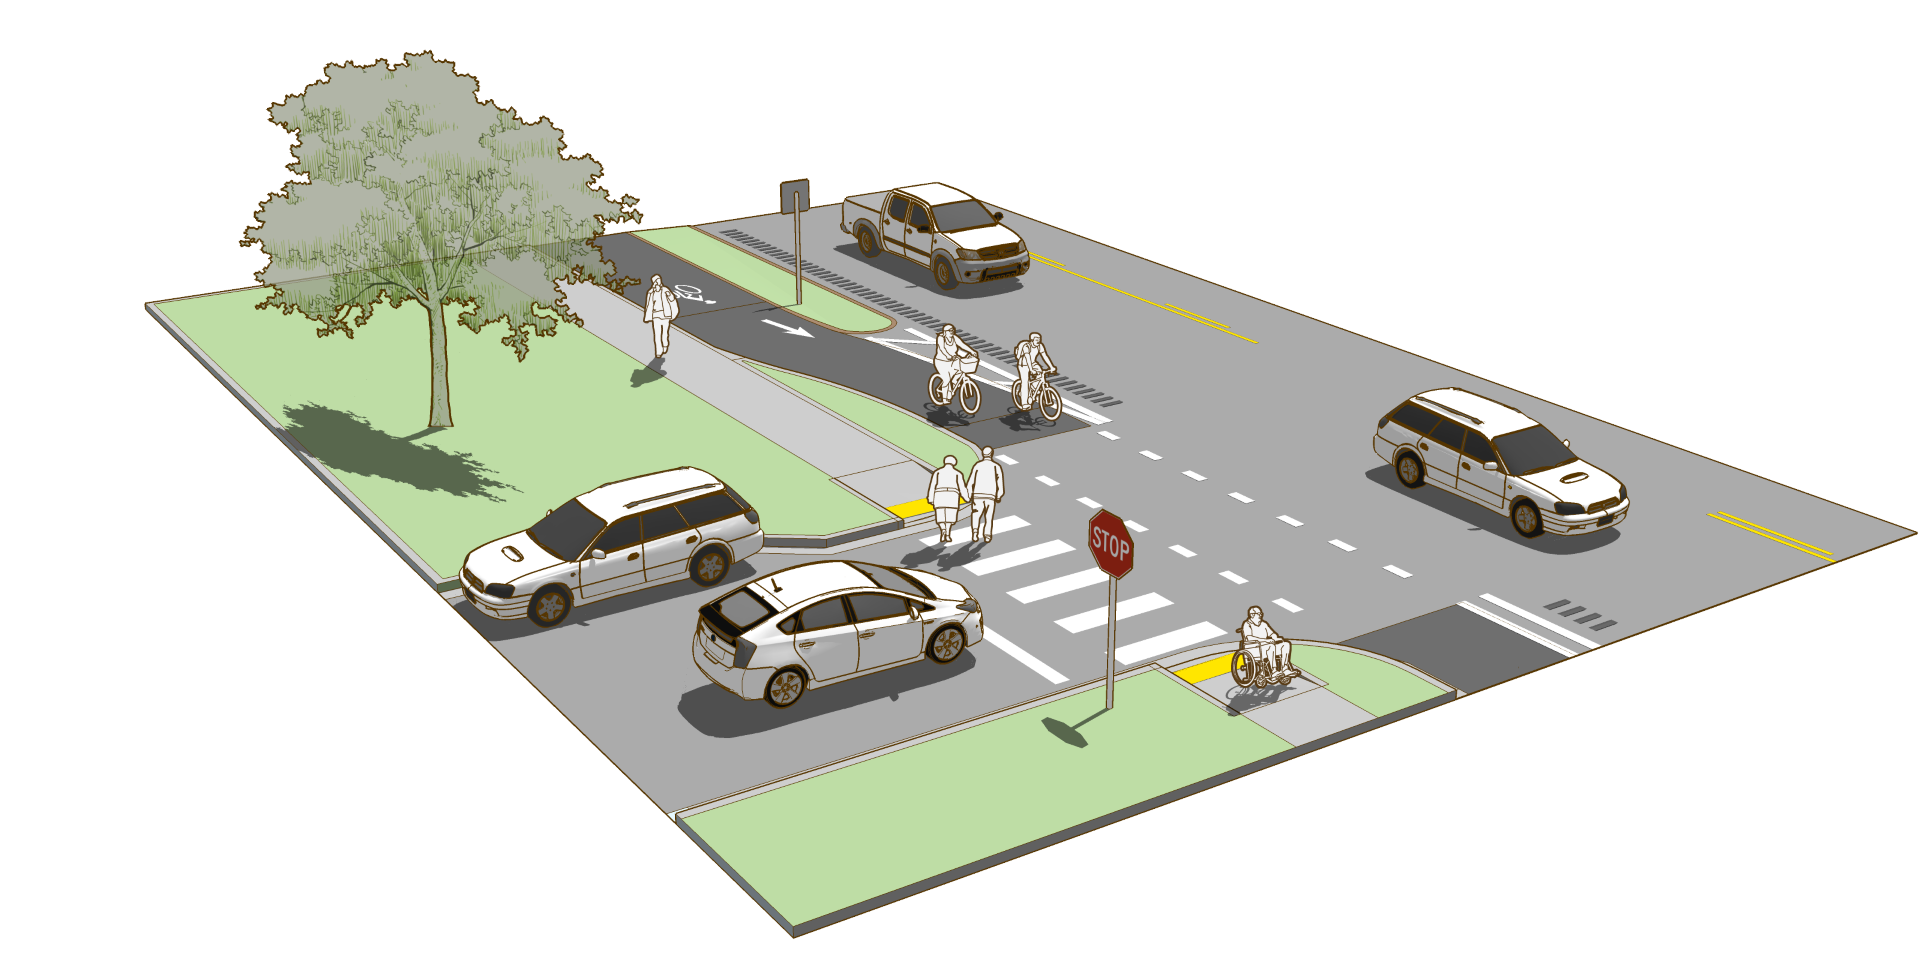 Separated bike lane design. Highway clipart rural road